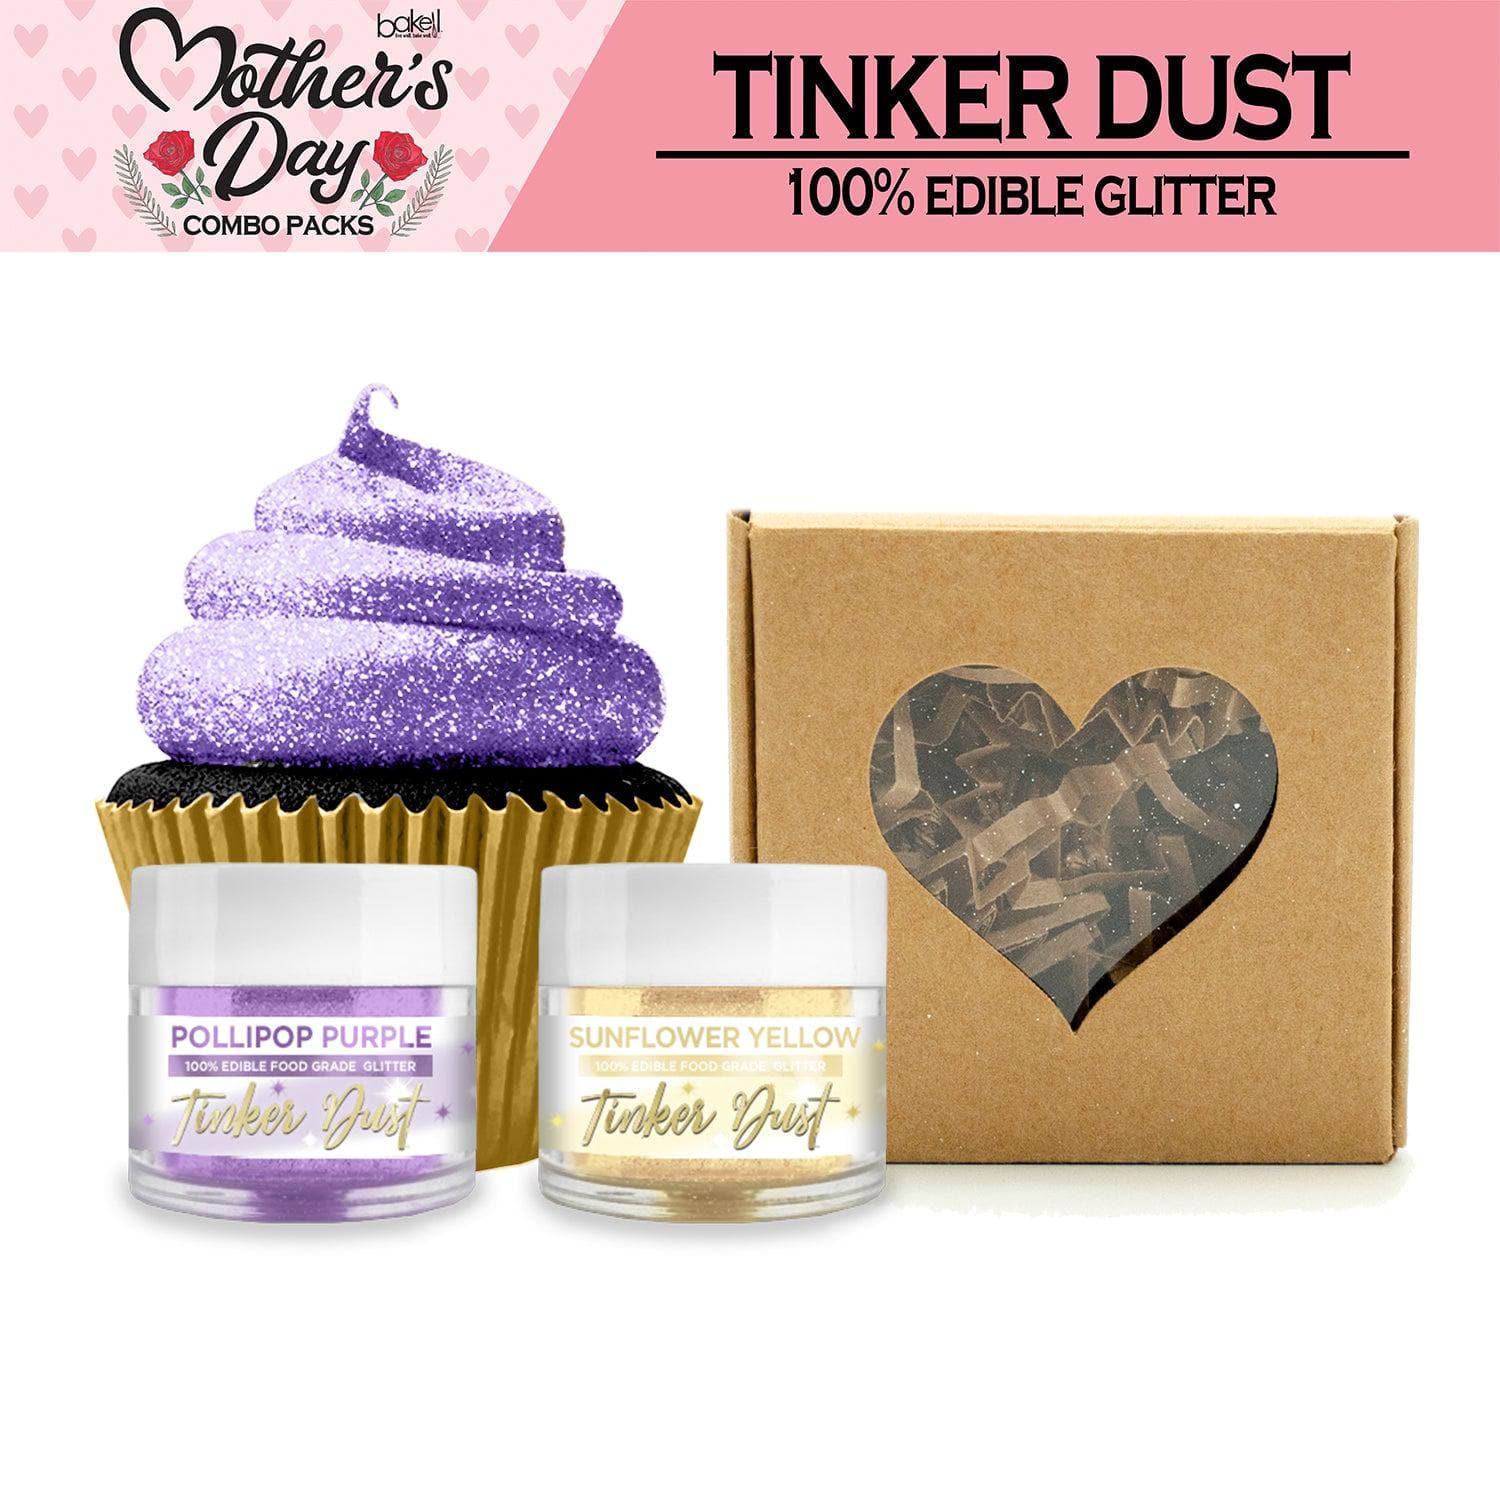 Mother's Day Tinker Dust® Glee Combo Pack (2 PC SET)-Tinker Dust_Pack-bakell